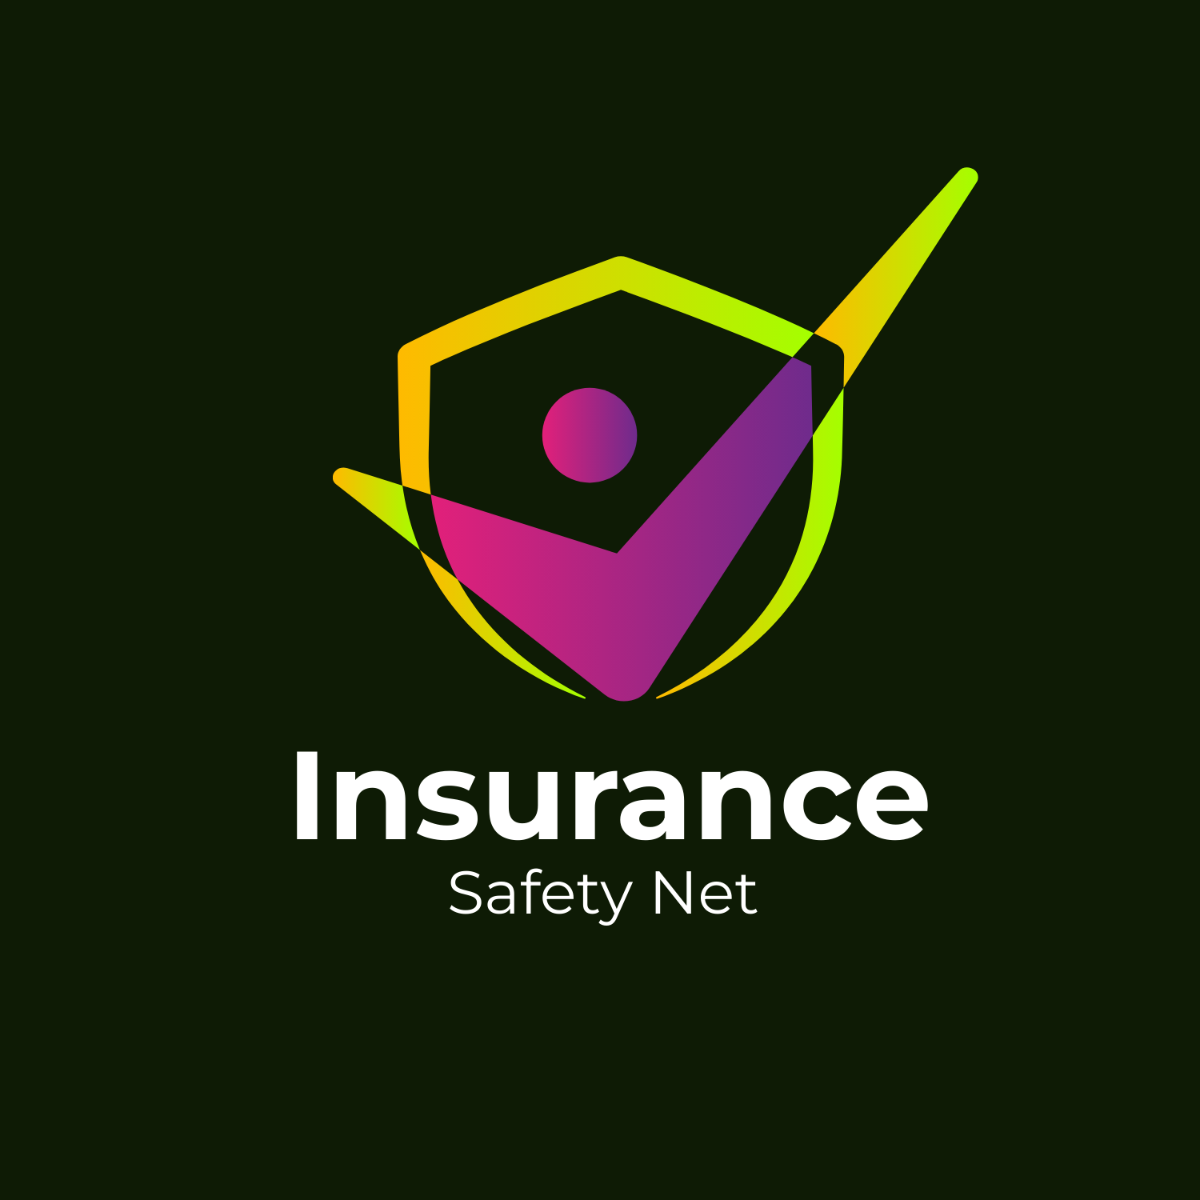 Insurance Safety Net Logo Template